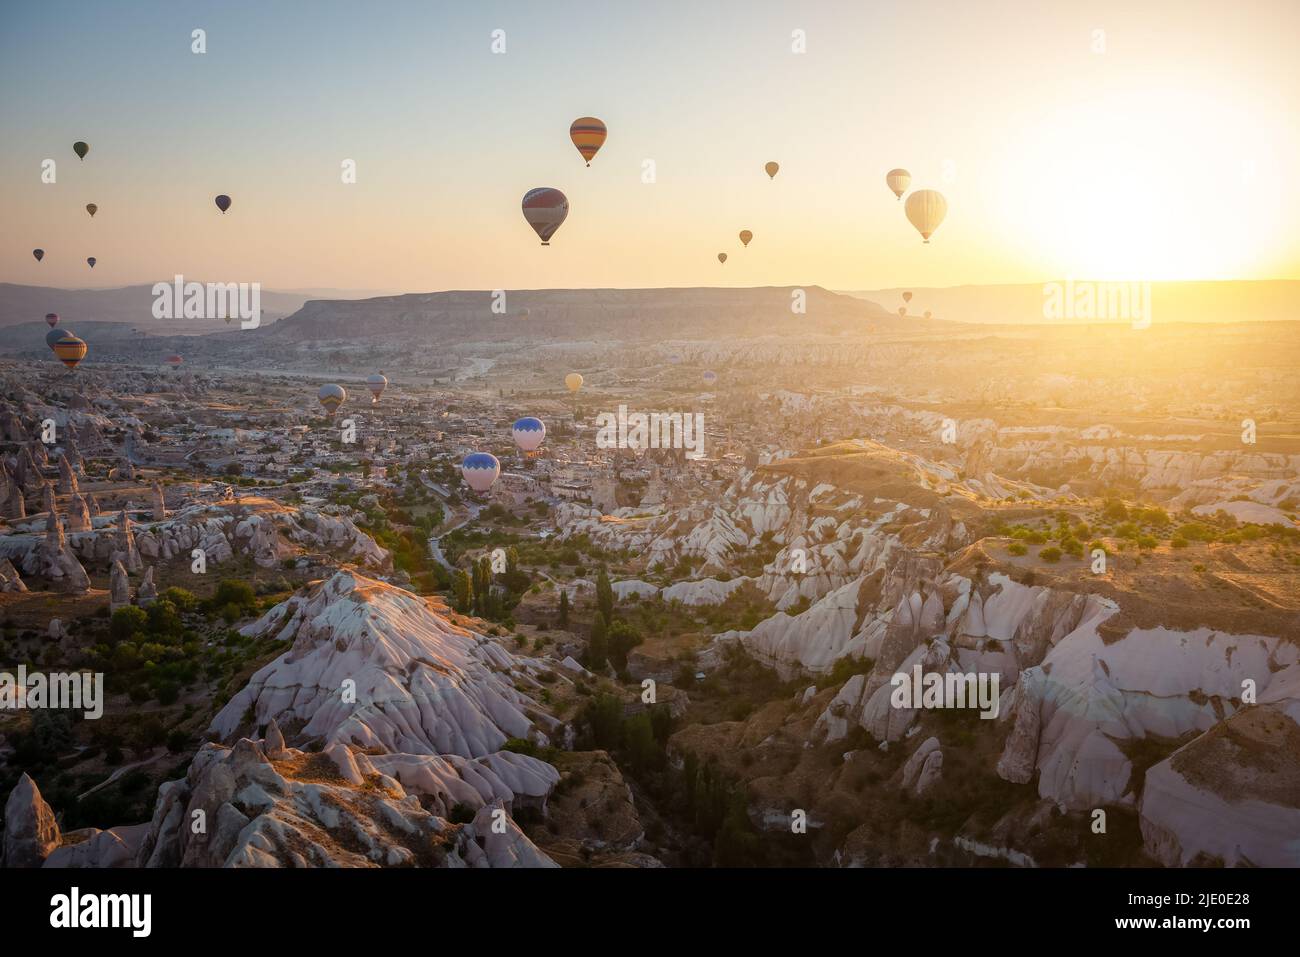 Hot air balloons flying over Cappadocia, Turkey Stock Photo